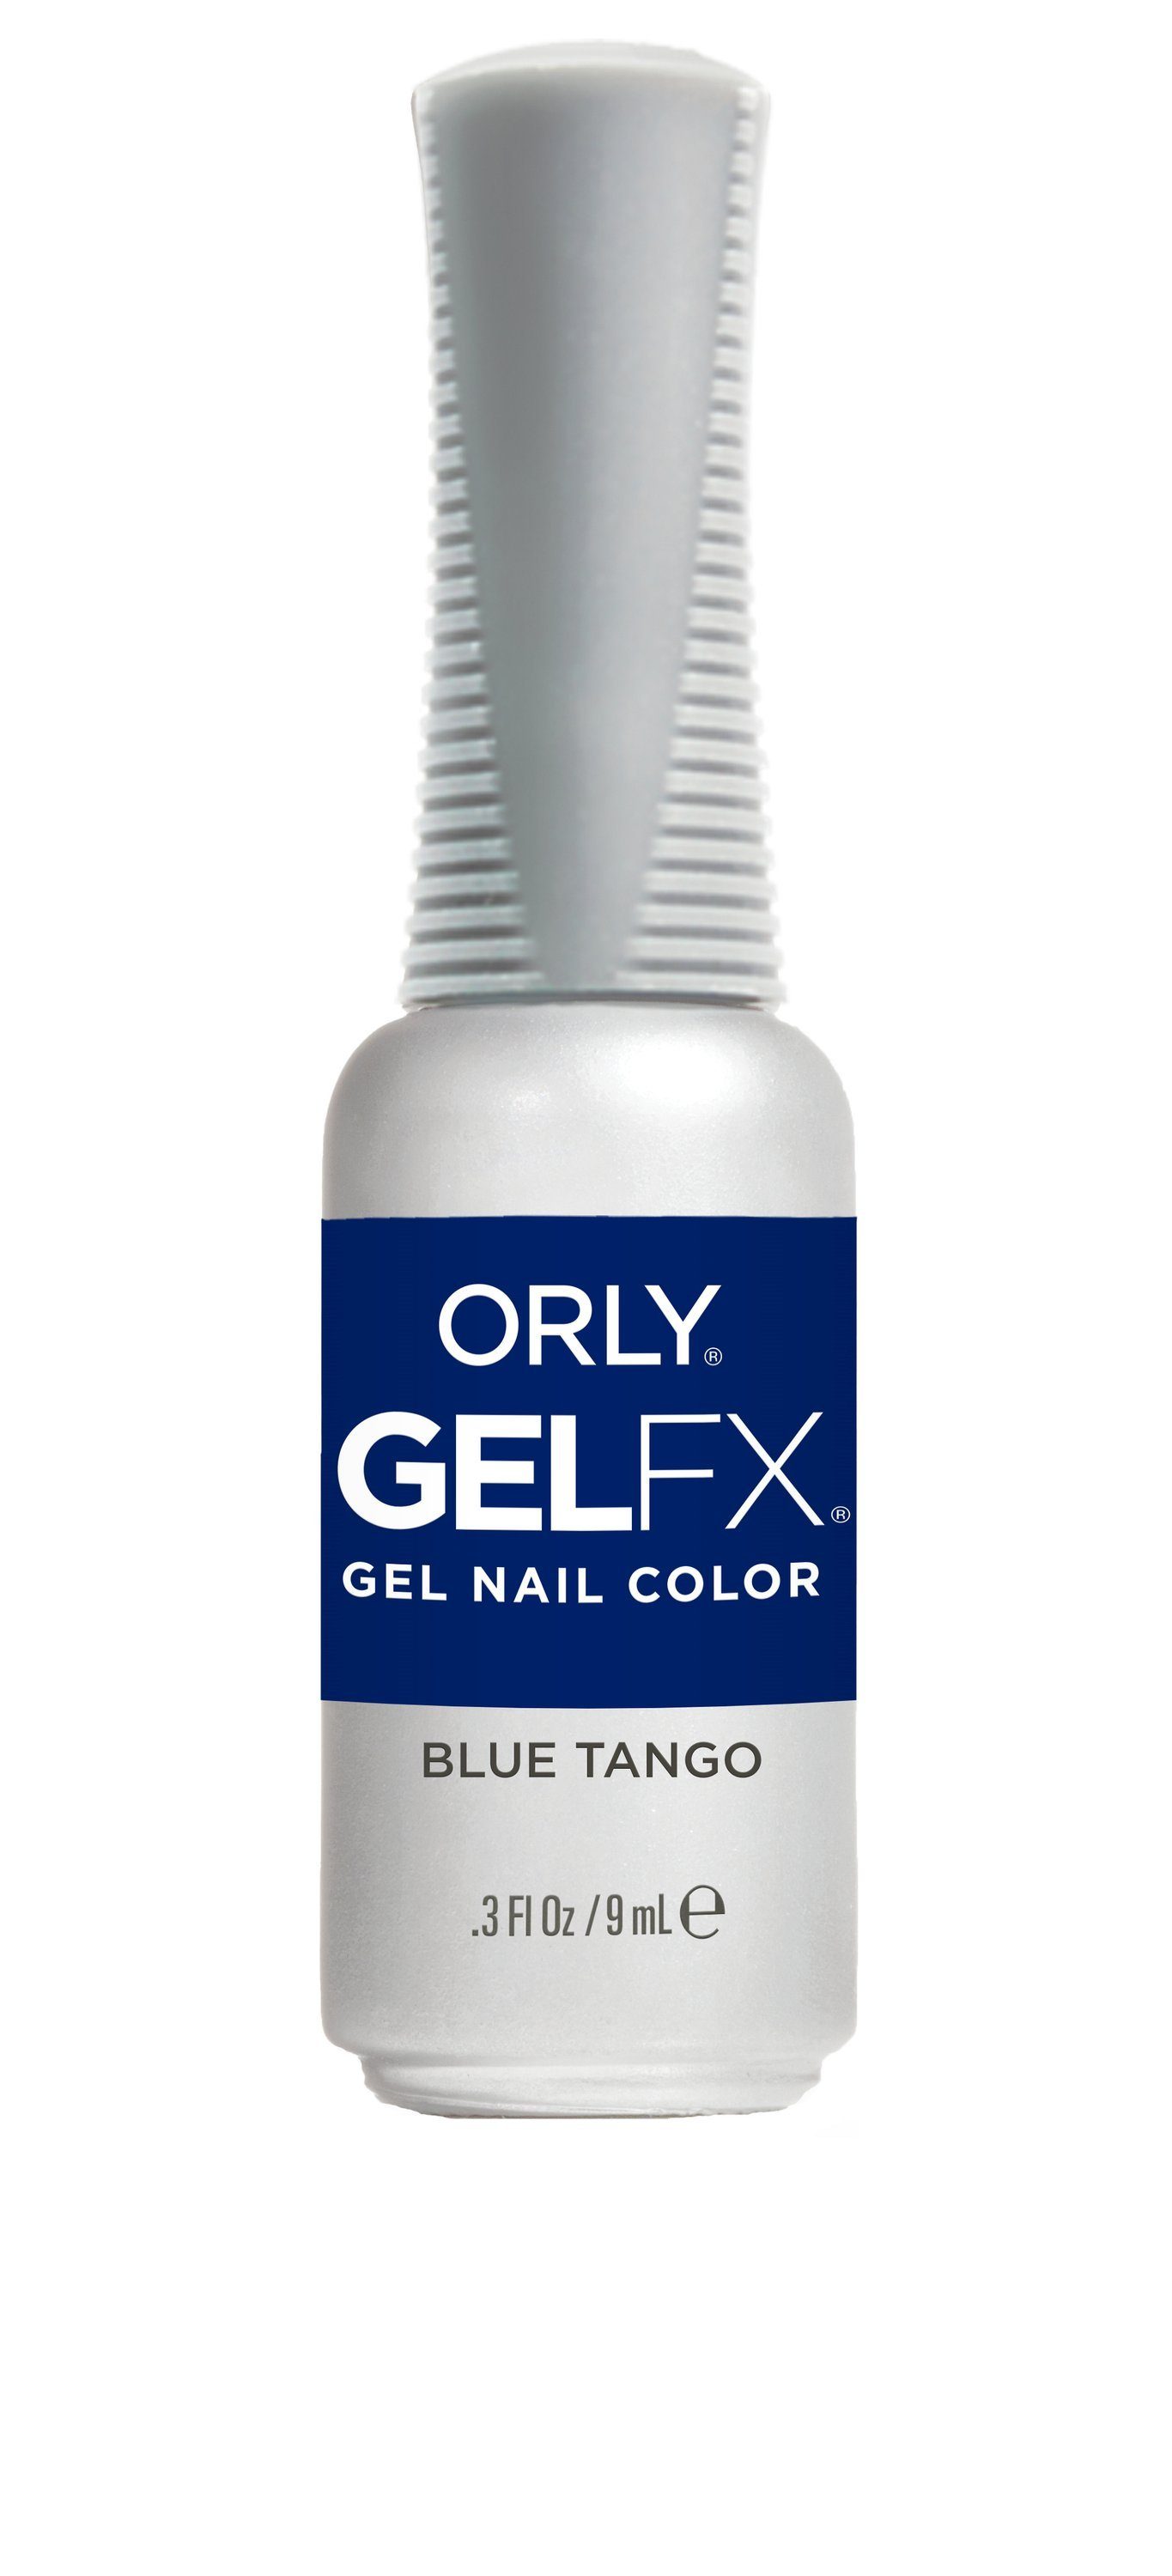 ORLY UV-Nagellack ORLY GEL FX Blue Tango, 9 ml